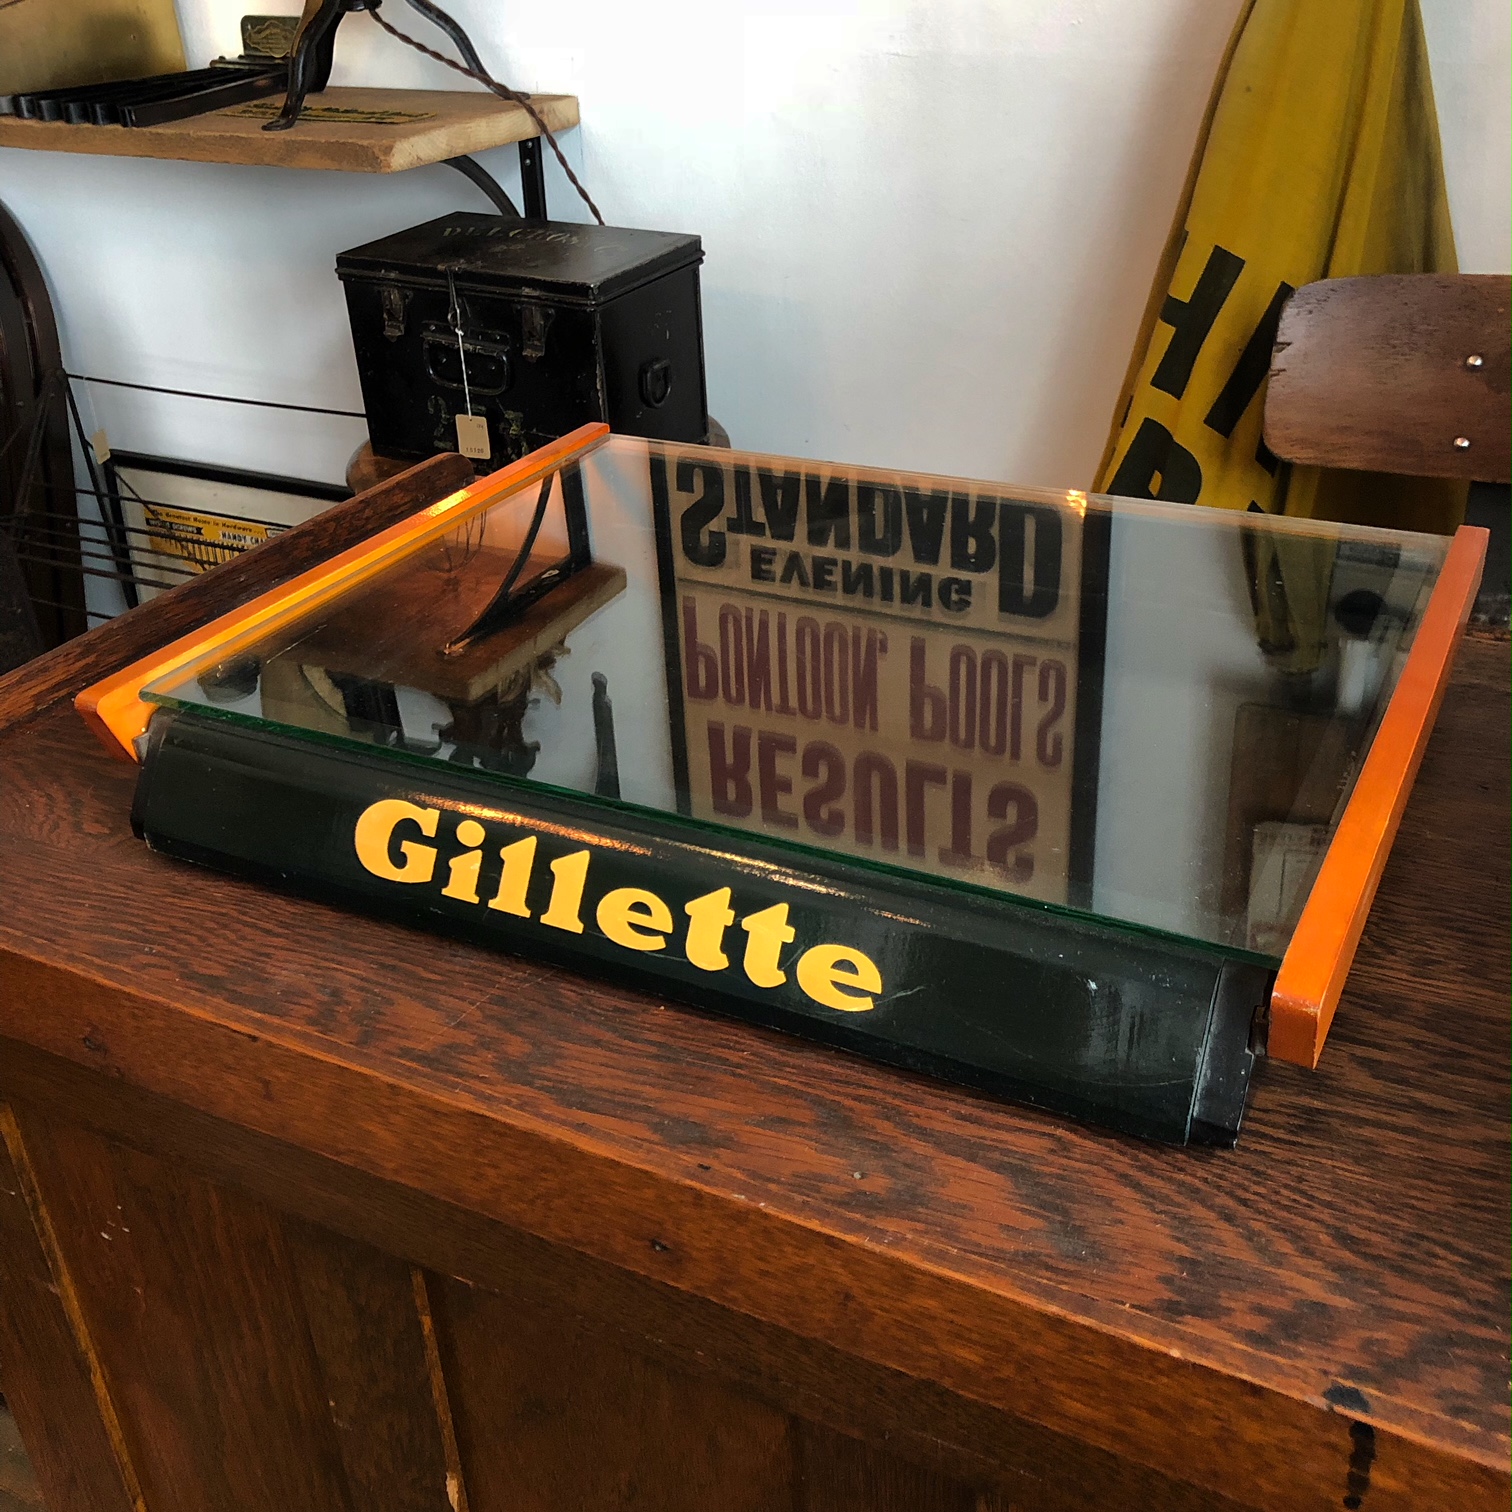 Vintage Gillette Showcase